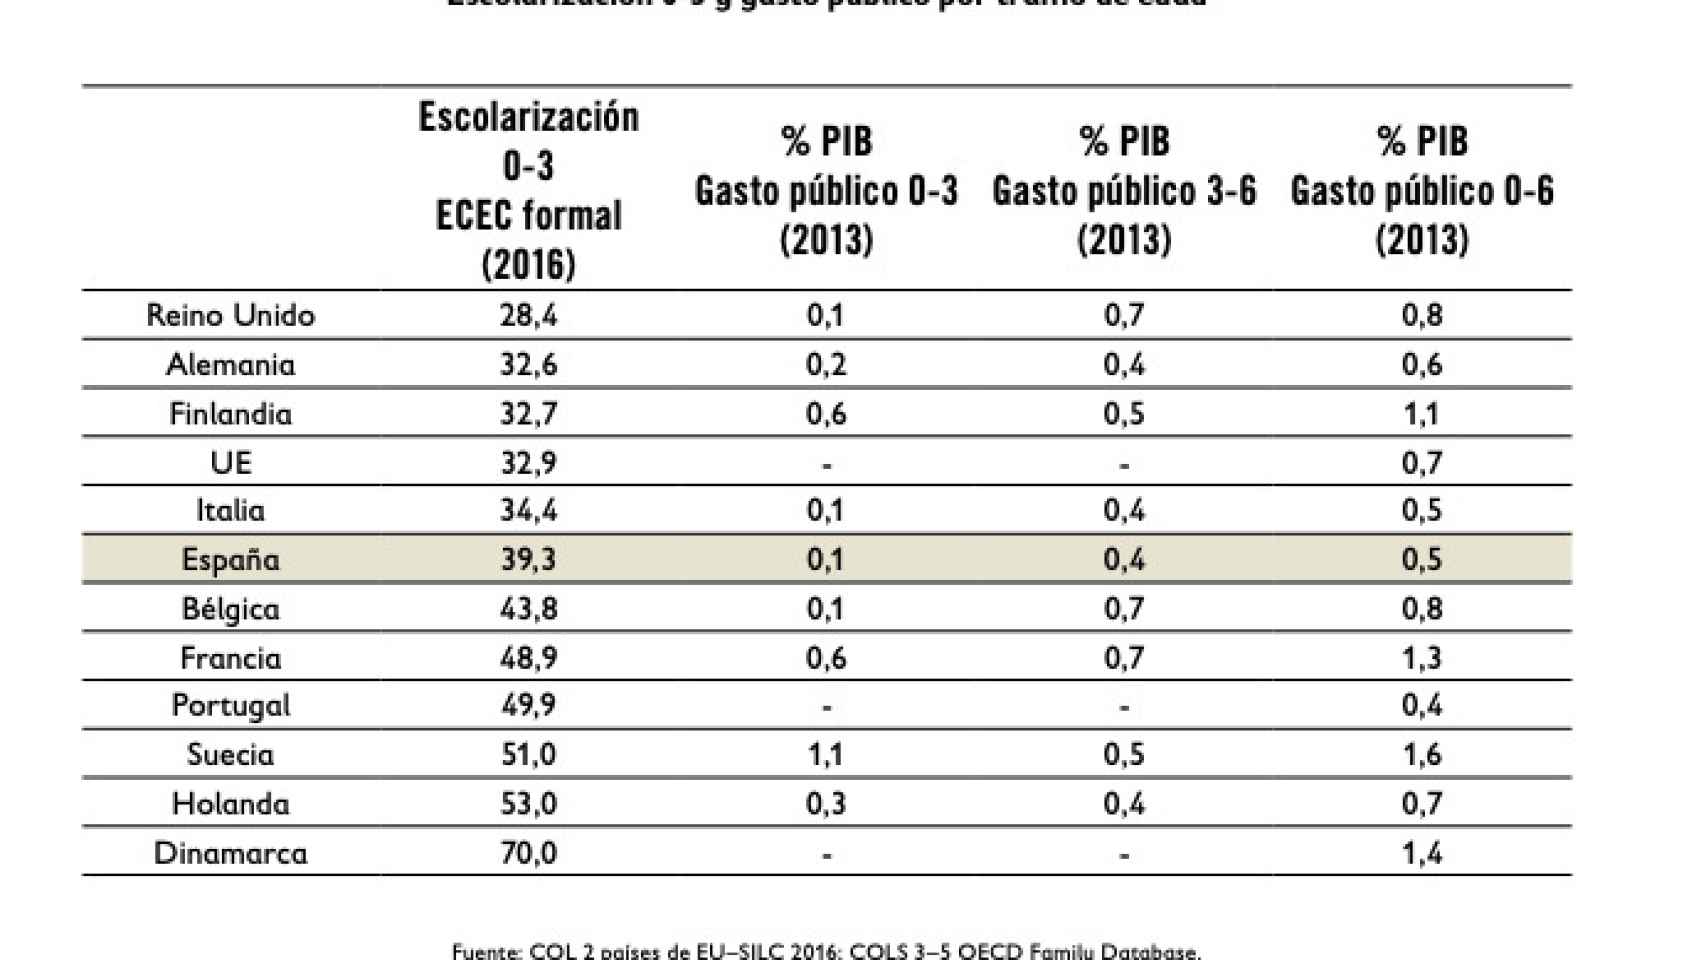 En España se han alcanzado niveles de escolarización para el 0-3 cercanos a Alemania.